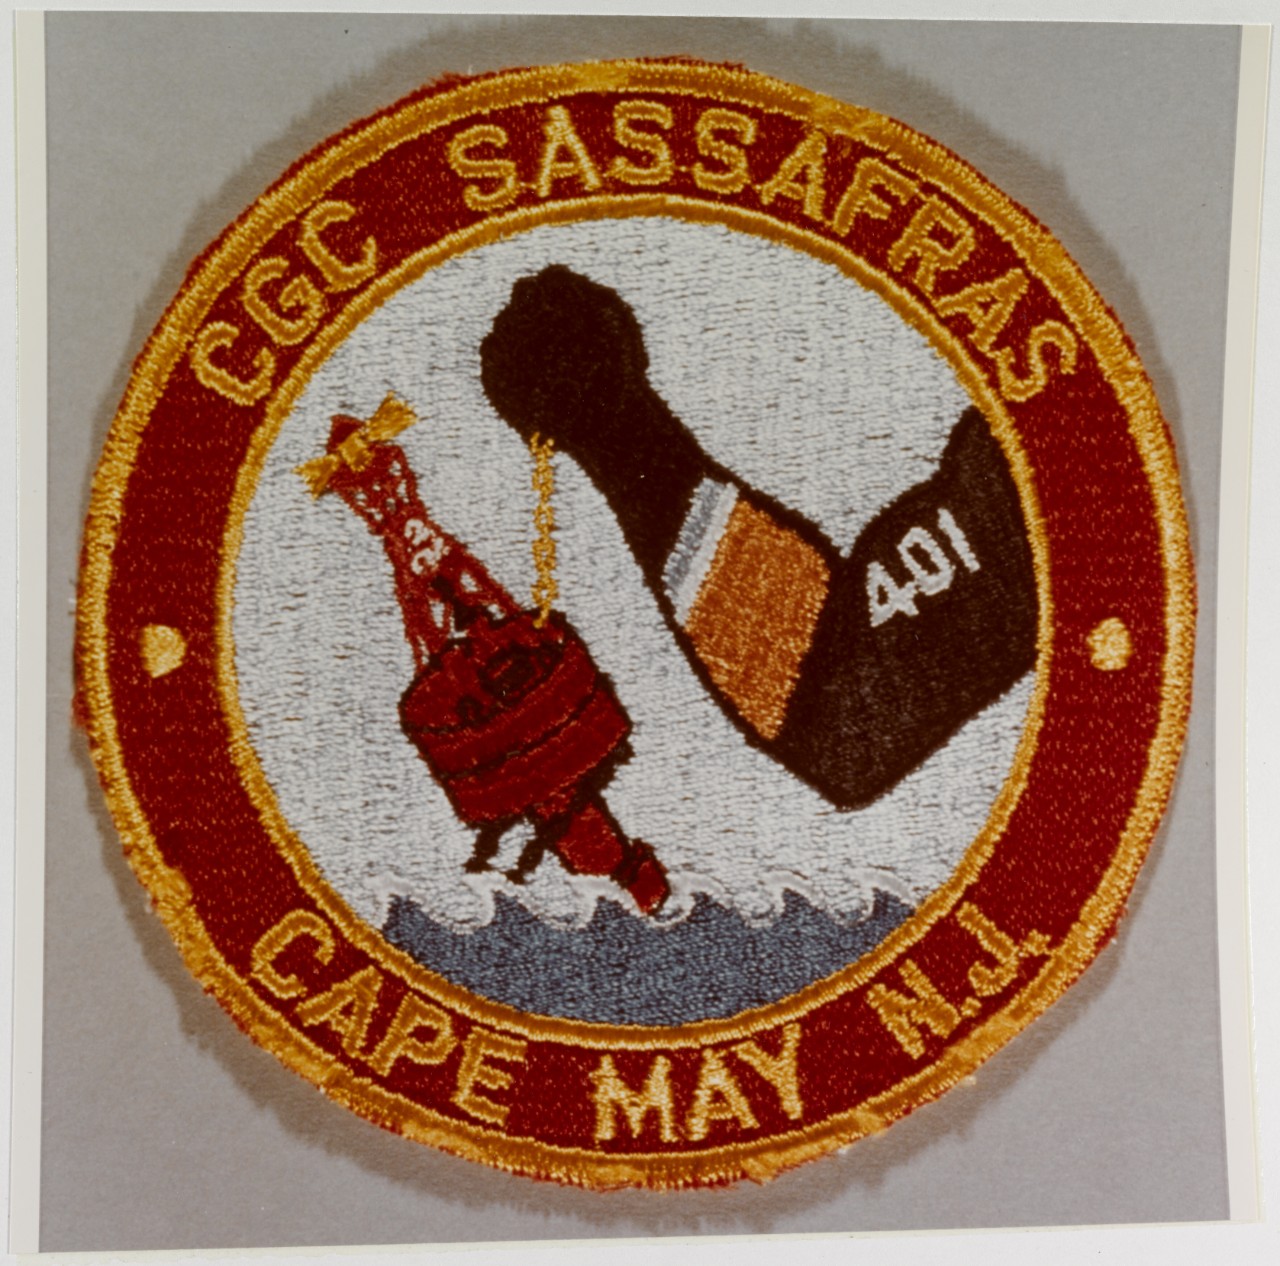 Insignia: U.S. Coast Guard Cutter SASSAFRAS (WLB-401)